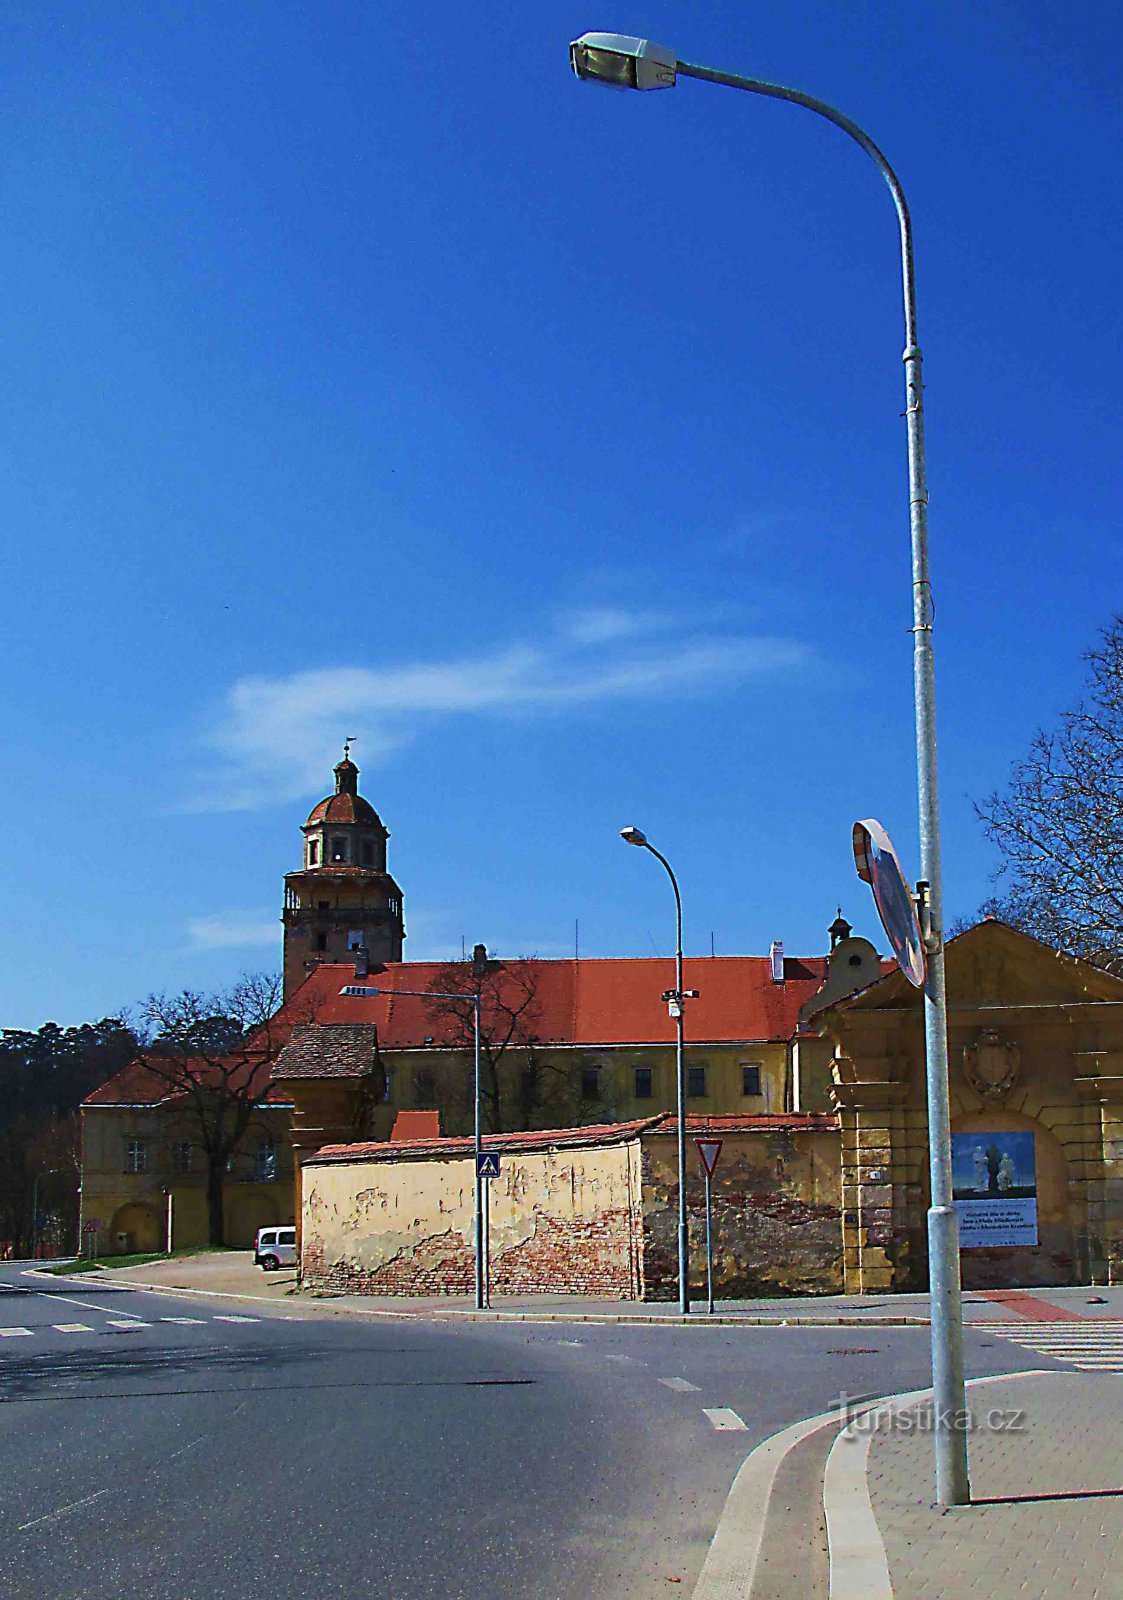 Castle grounds in Moravské Krumlov